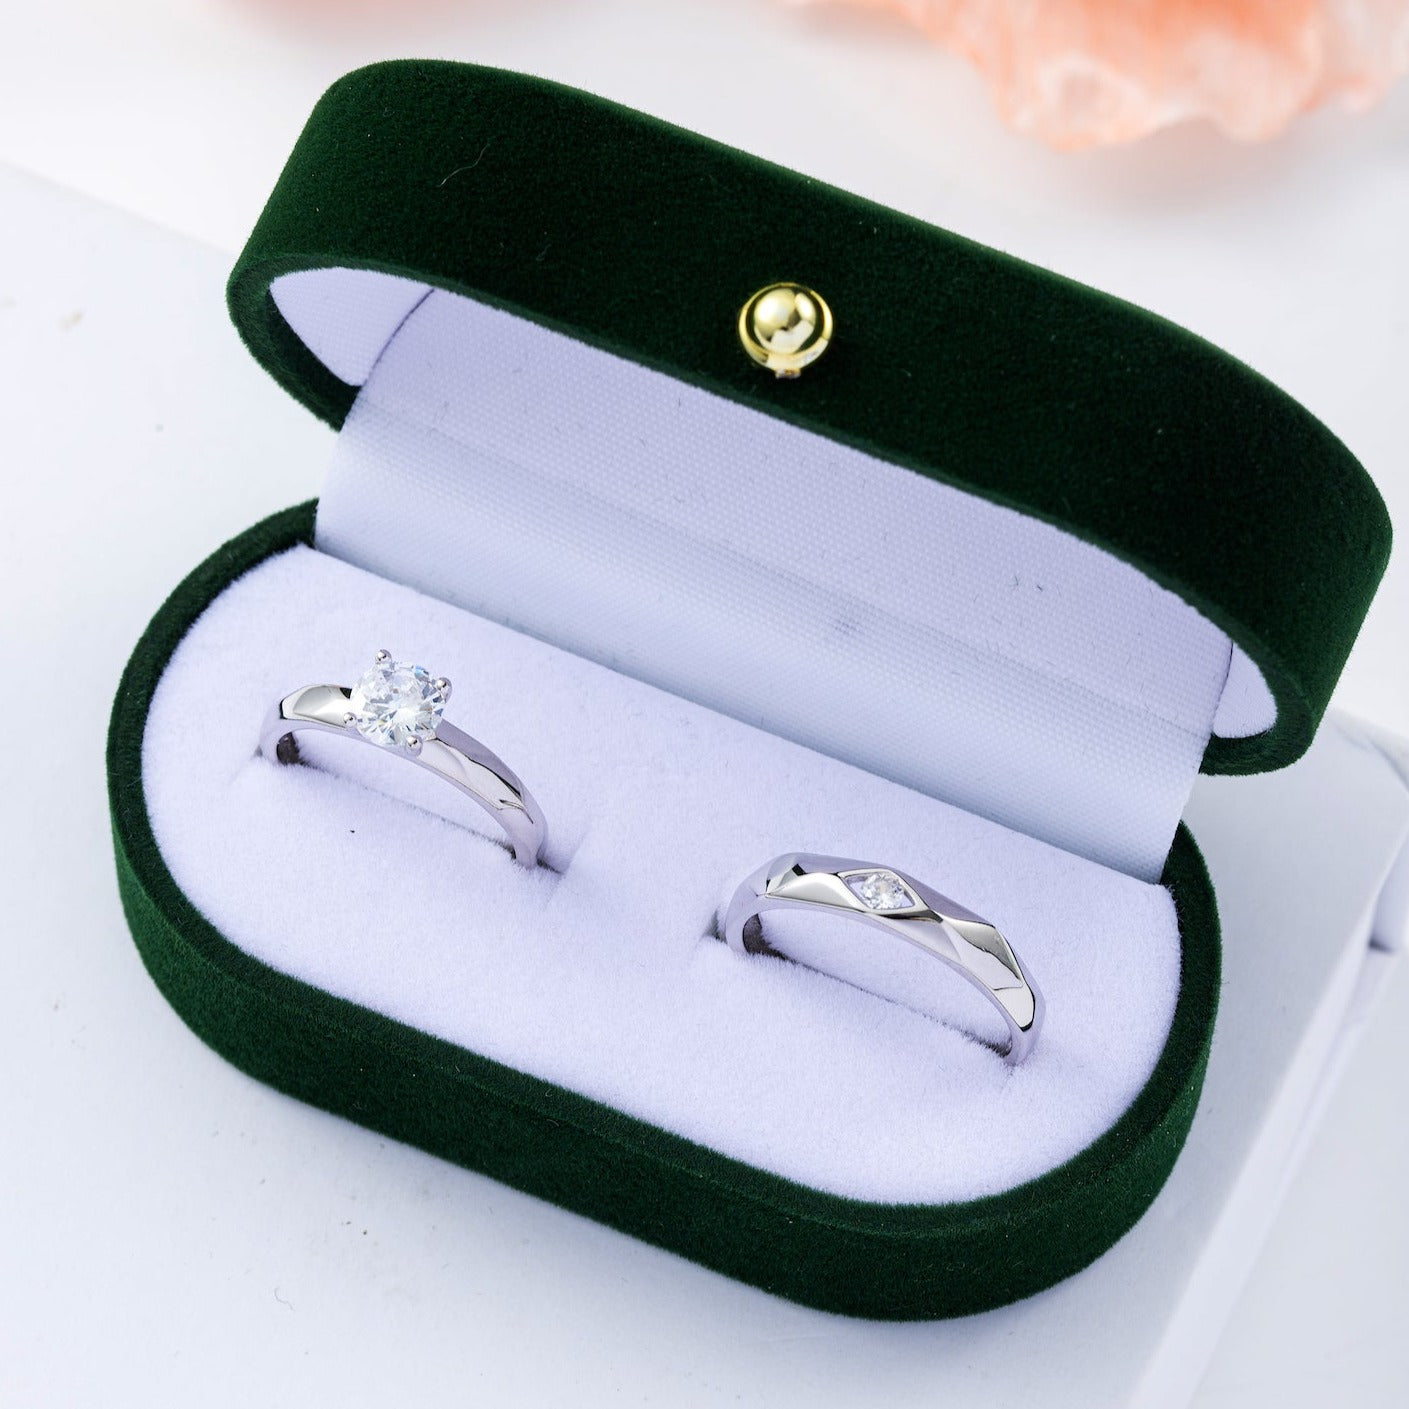 Diamond Cut S925 Silver Couple Rings